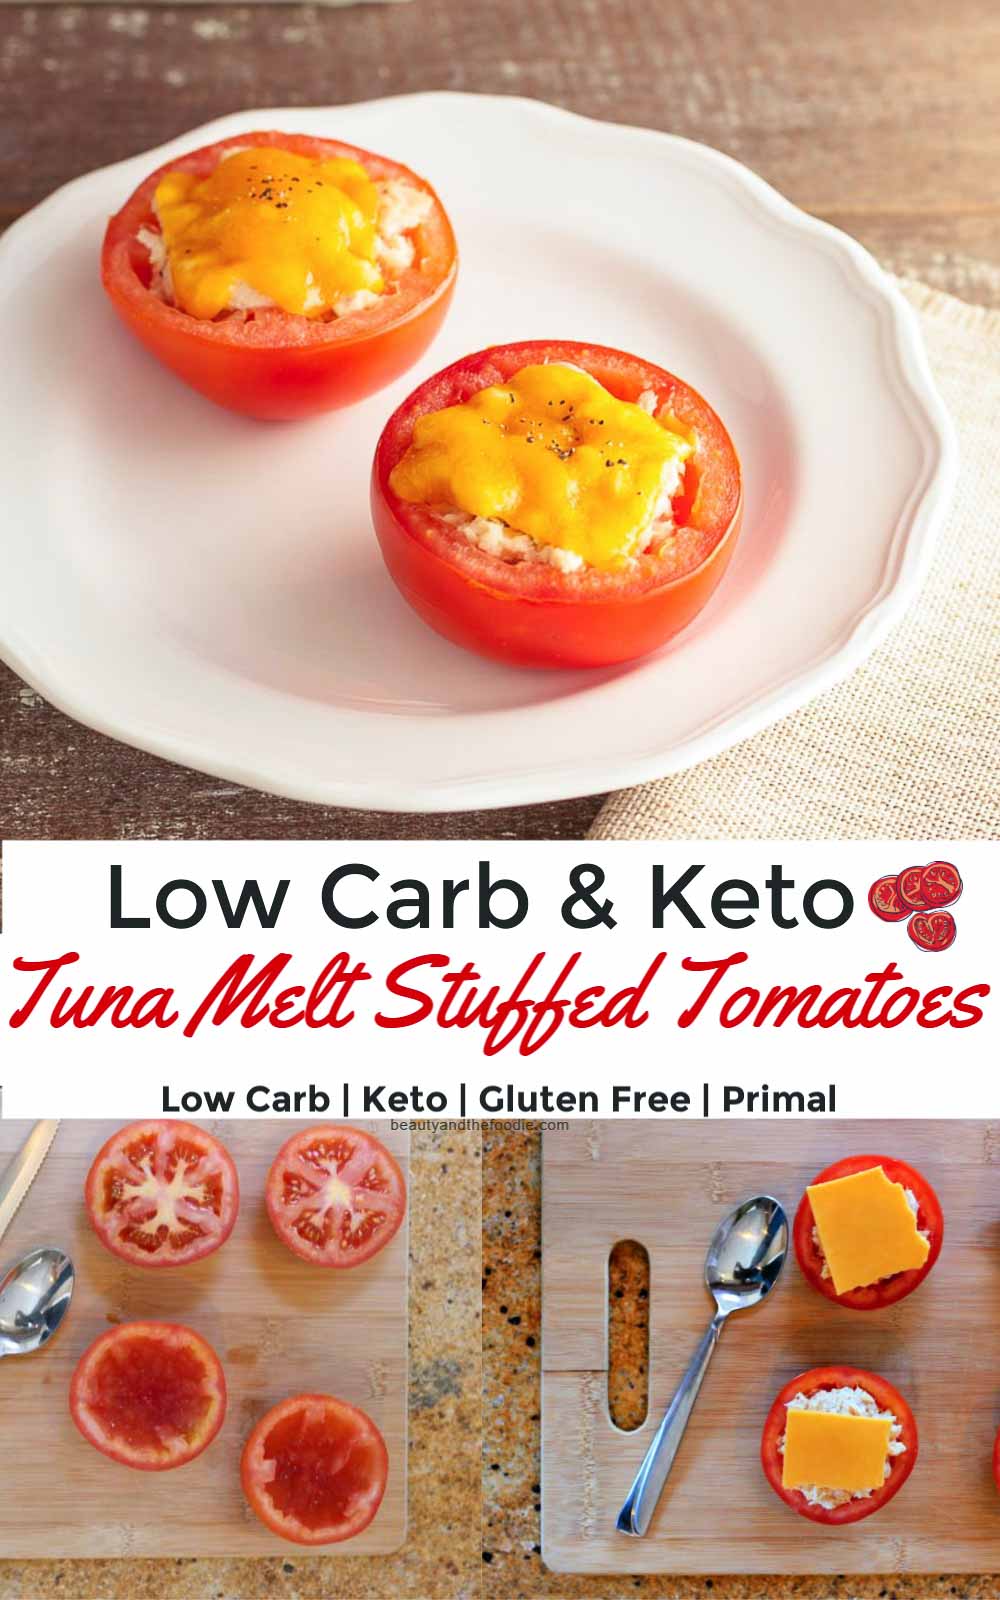 Low Carb Tuna melt stuffed tomatoes